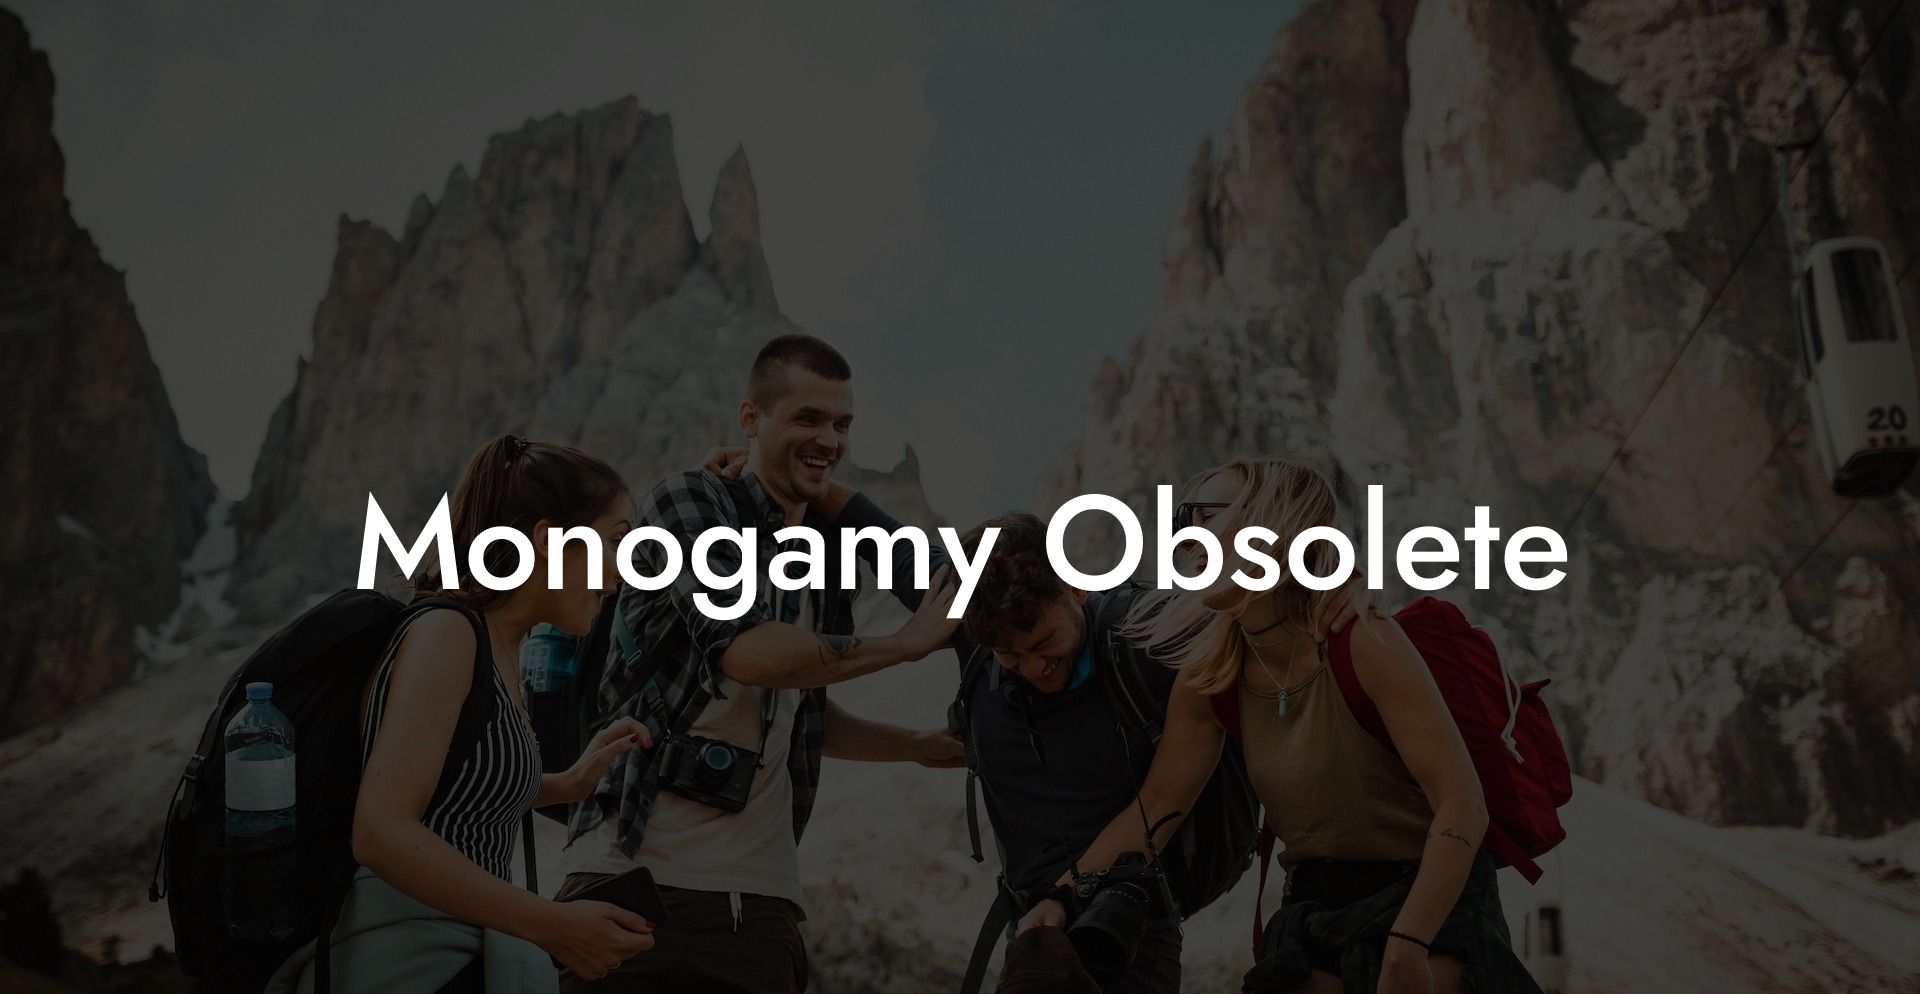 Monogamy Obsolete